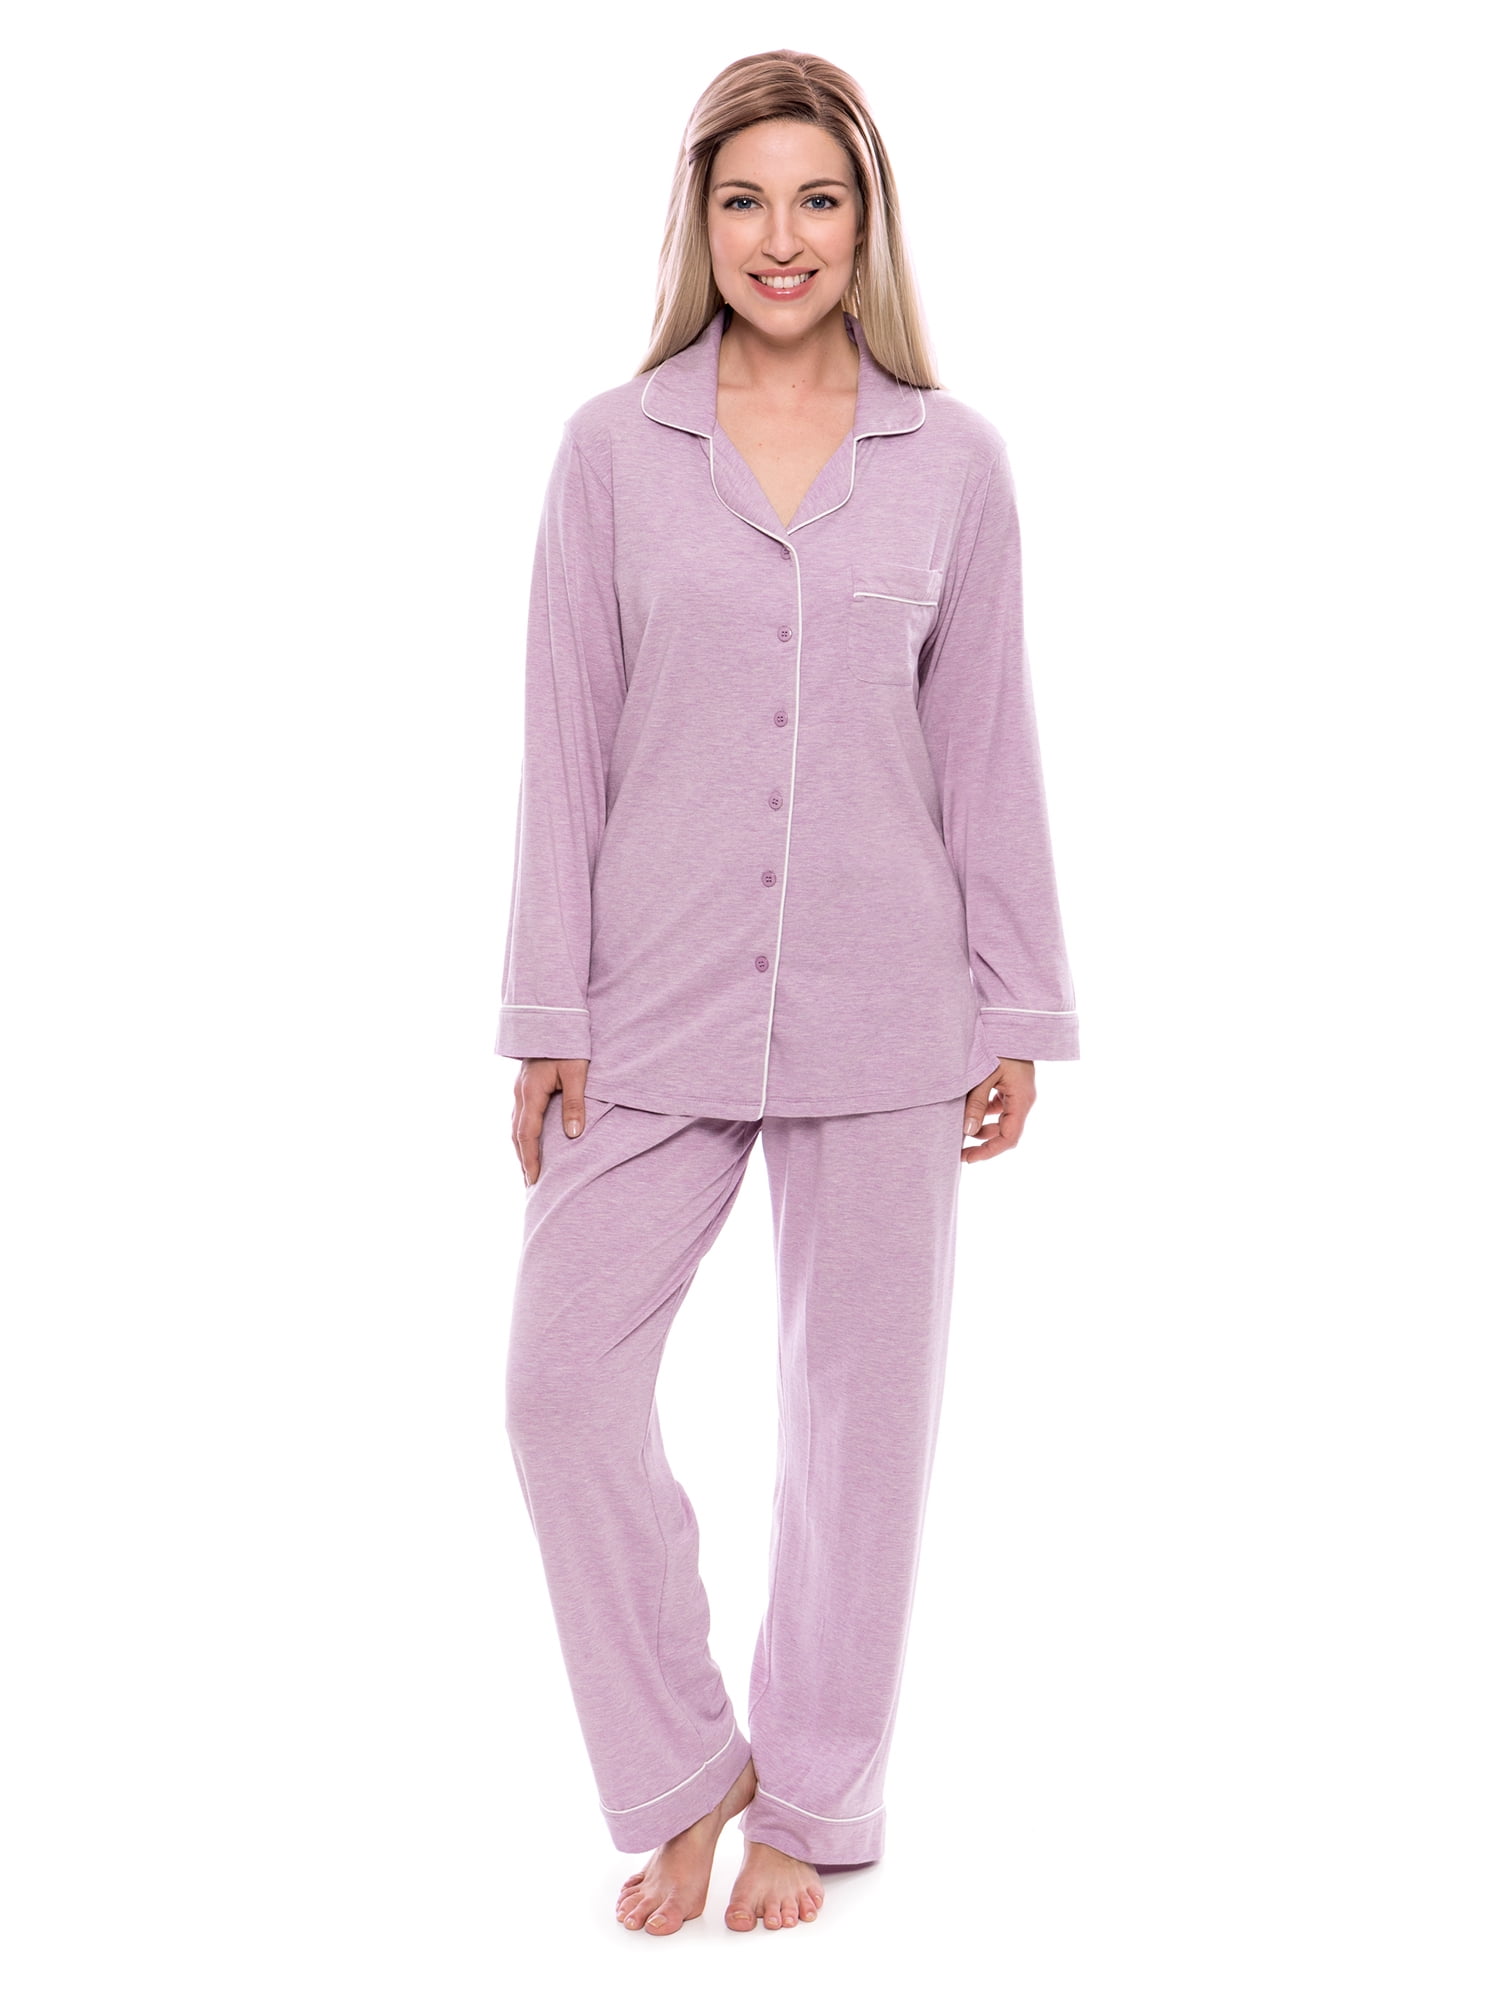 Women's Button-Up Long Sleeve Pajamas Classicomfort Sleepwear set by Texere 